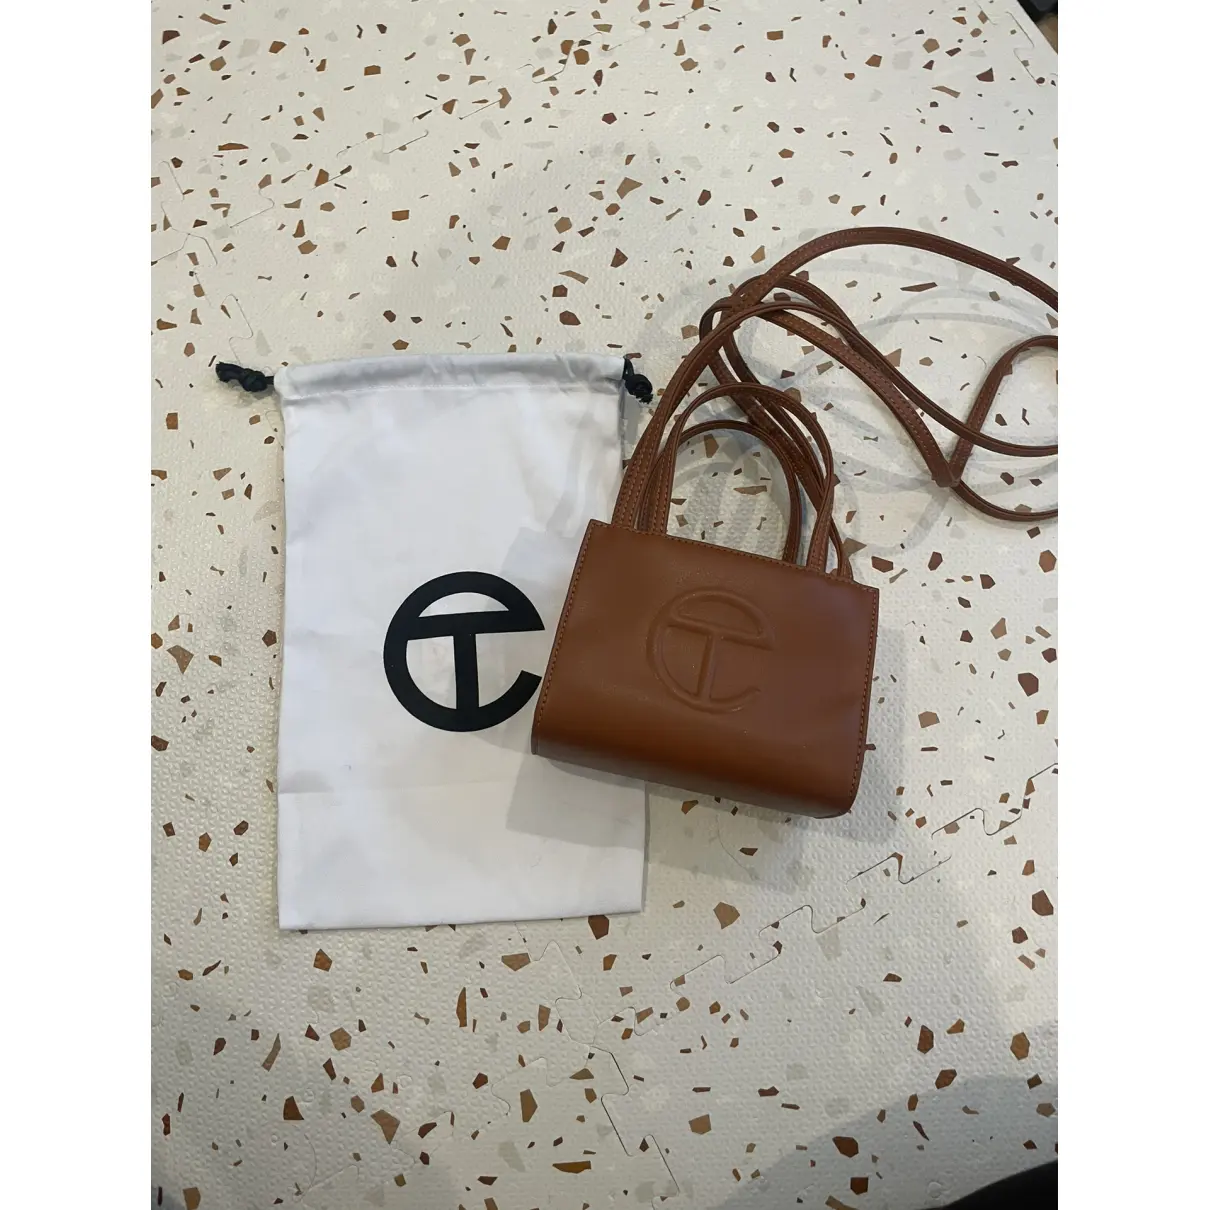 Buy Telfar Small Shopping Bag vegan leather tote online